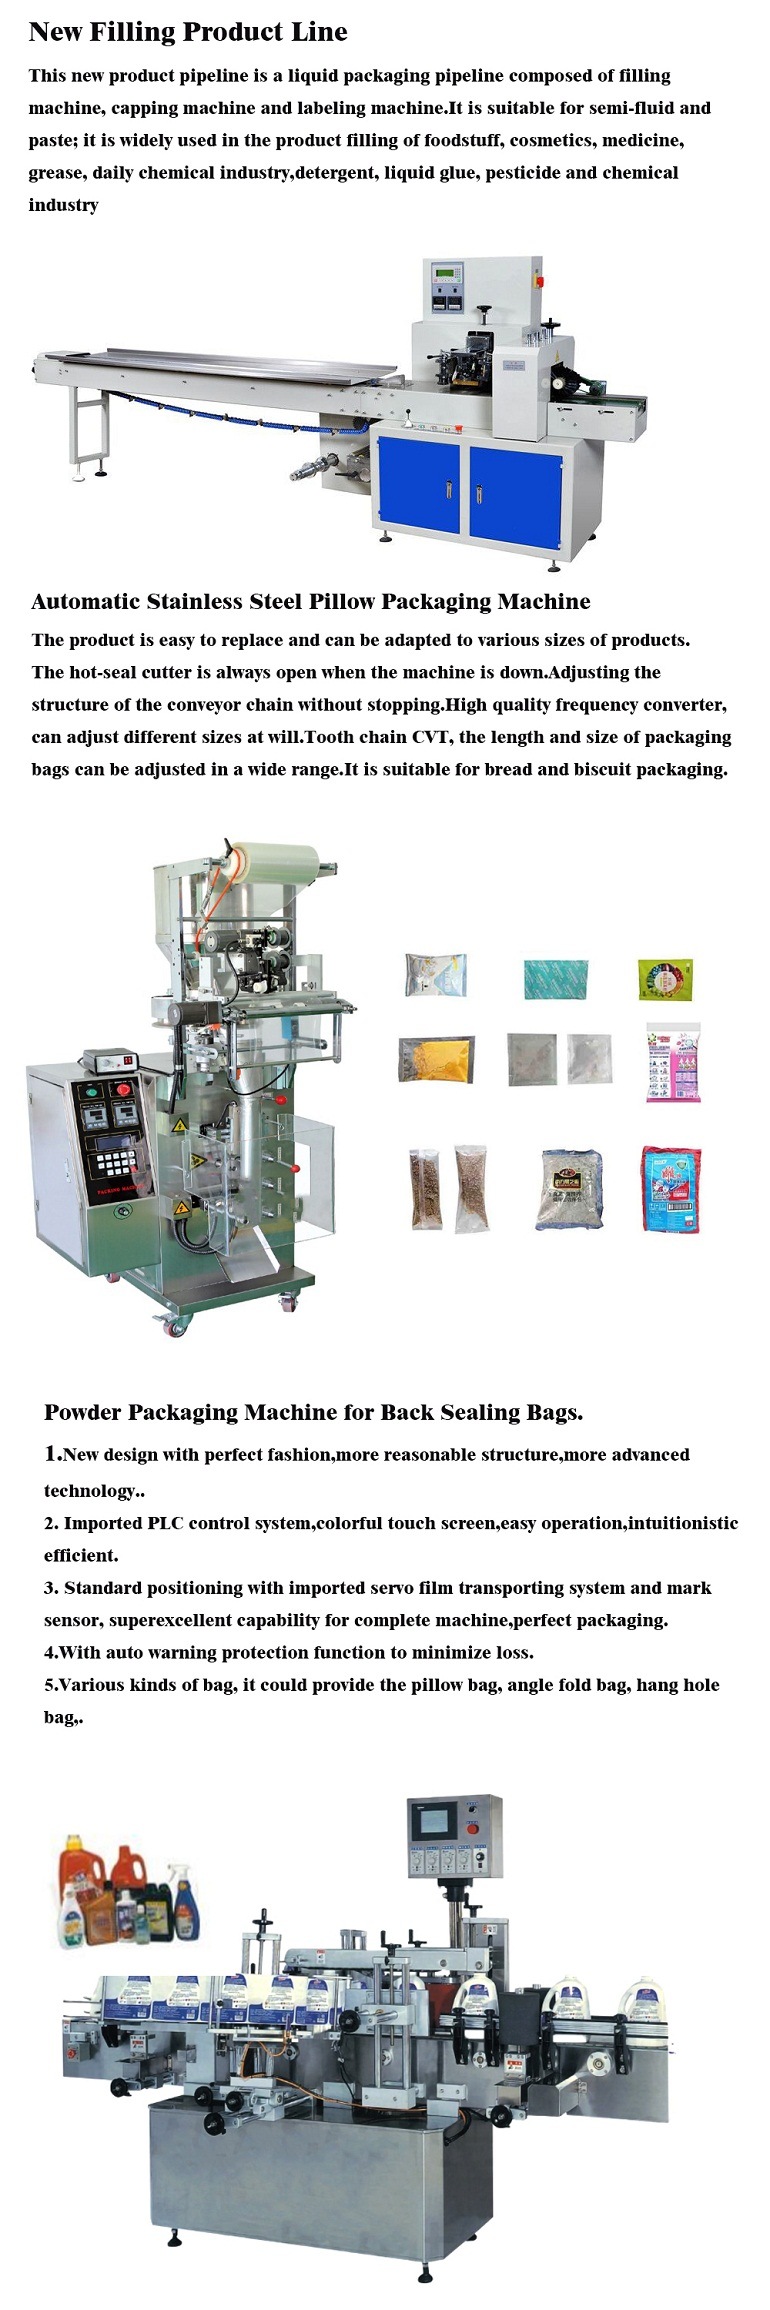 High Speed Powder Packaging Machine for Back Sealing Bags